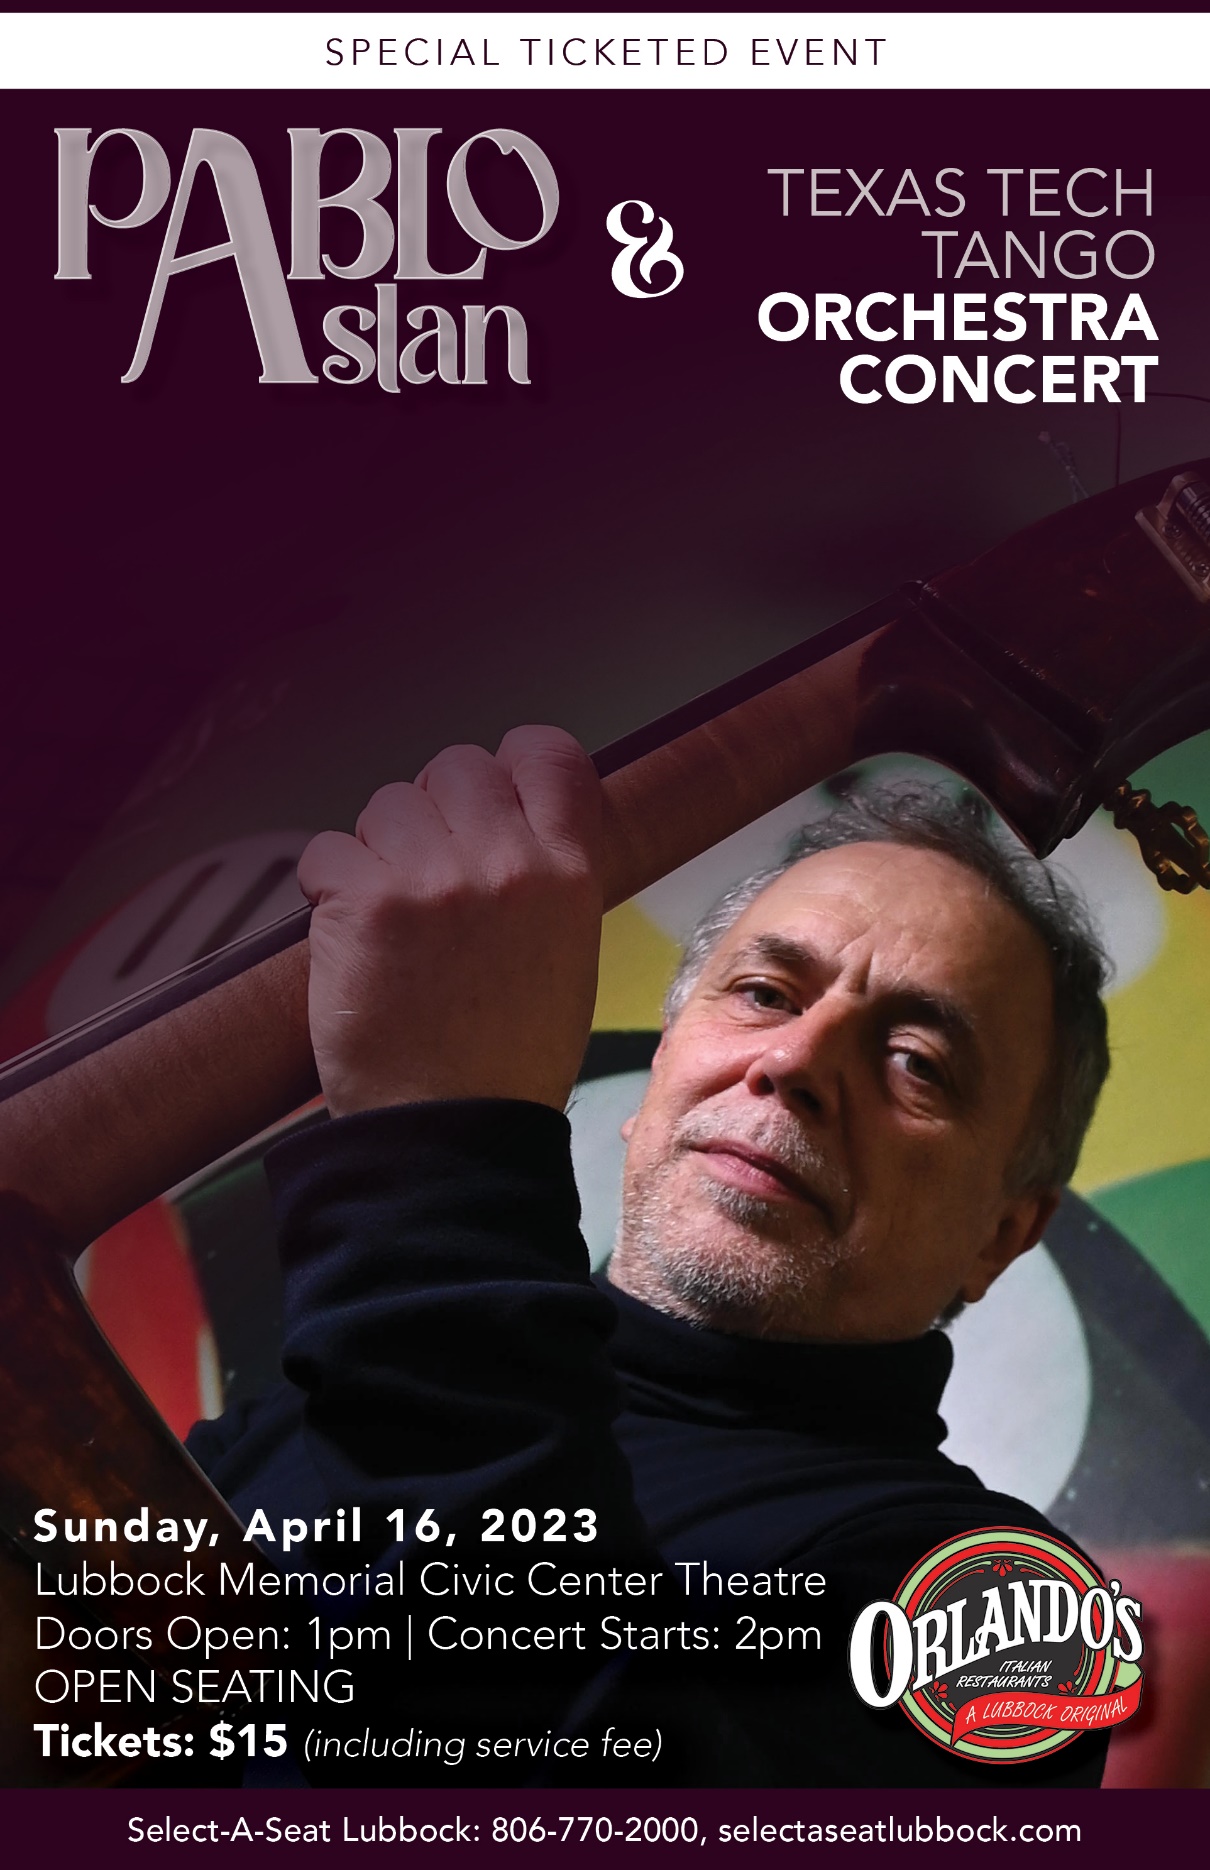 Image of Pablo Aslan's Concert Poster